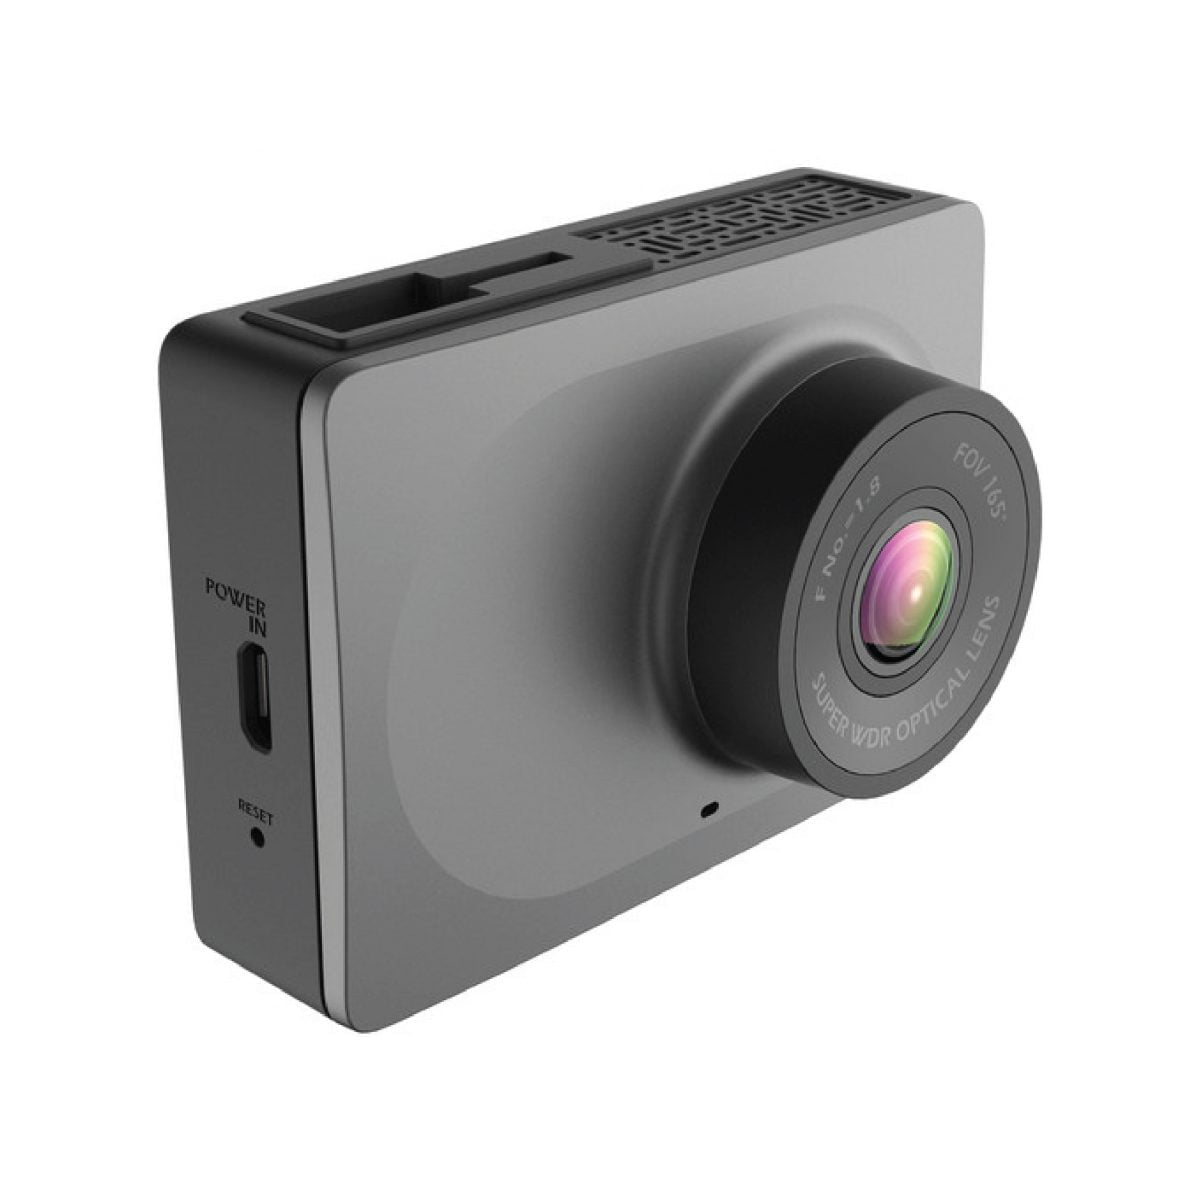 Yi Camera 06 شاومي &Lt;H1&Gt;Yi - كاميرا لوحة عدادات السيارة مدمجة مع شاشة 2.7 بوصة وعدسة 130 درجة Wdr ومستشعر G وتسجيل متكرر&Lt;/H1&Gt;
1080P60 Full Hd 165 زاوية عريضة وكاميرا لوحة القيادة الأمامية مسجل السيارة Dvr مع Adas ، G-Sensor ، تطبيق الهاتف ، Wdr ، تسجيل حلقة - رمادي Https://Youtu.be/Tsowlpdc0U4 Yi - سيارة كاميرا داش مدمجة ، كاميرا داش Yi - كاميرا لوحة عدادات السيارة مدمجة مع شاشة 2.7 بوصة وعدسة 130 درجة Wdr ومستشعر G وتسجيل متكرر